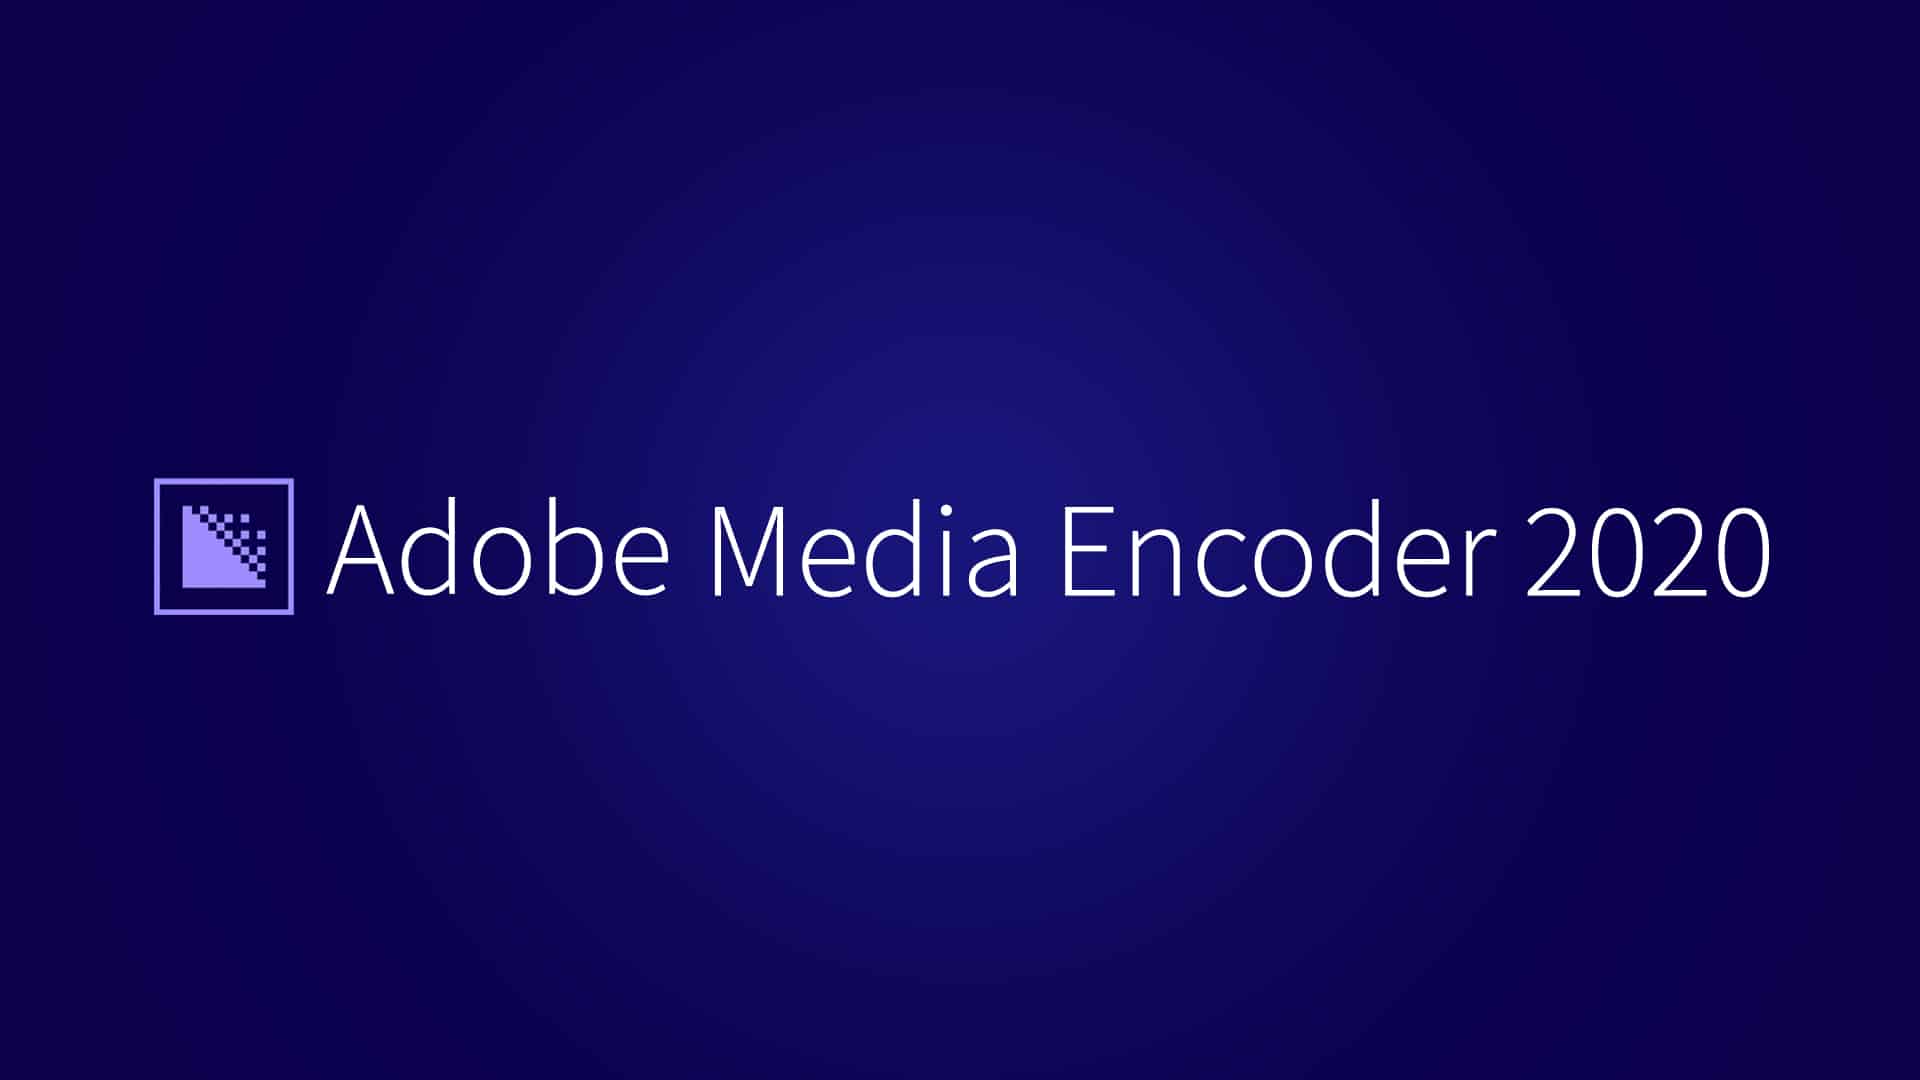 adobe media encoder free download pre cracked